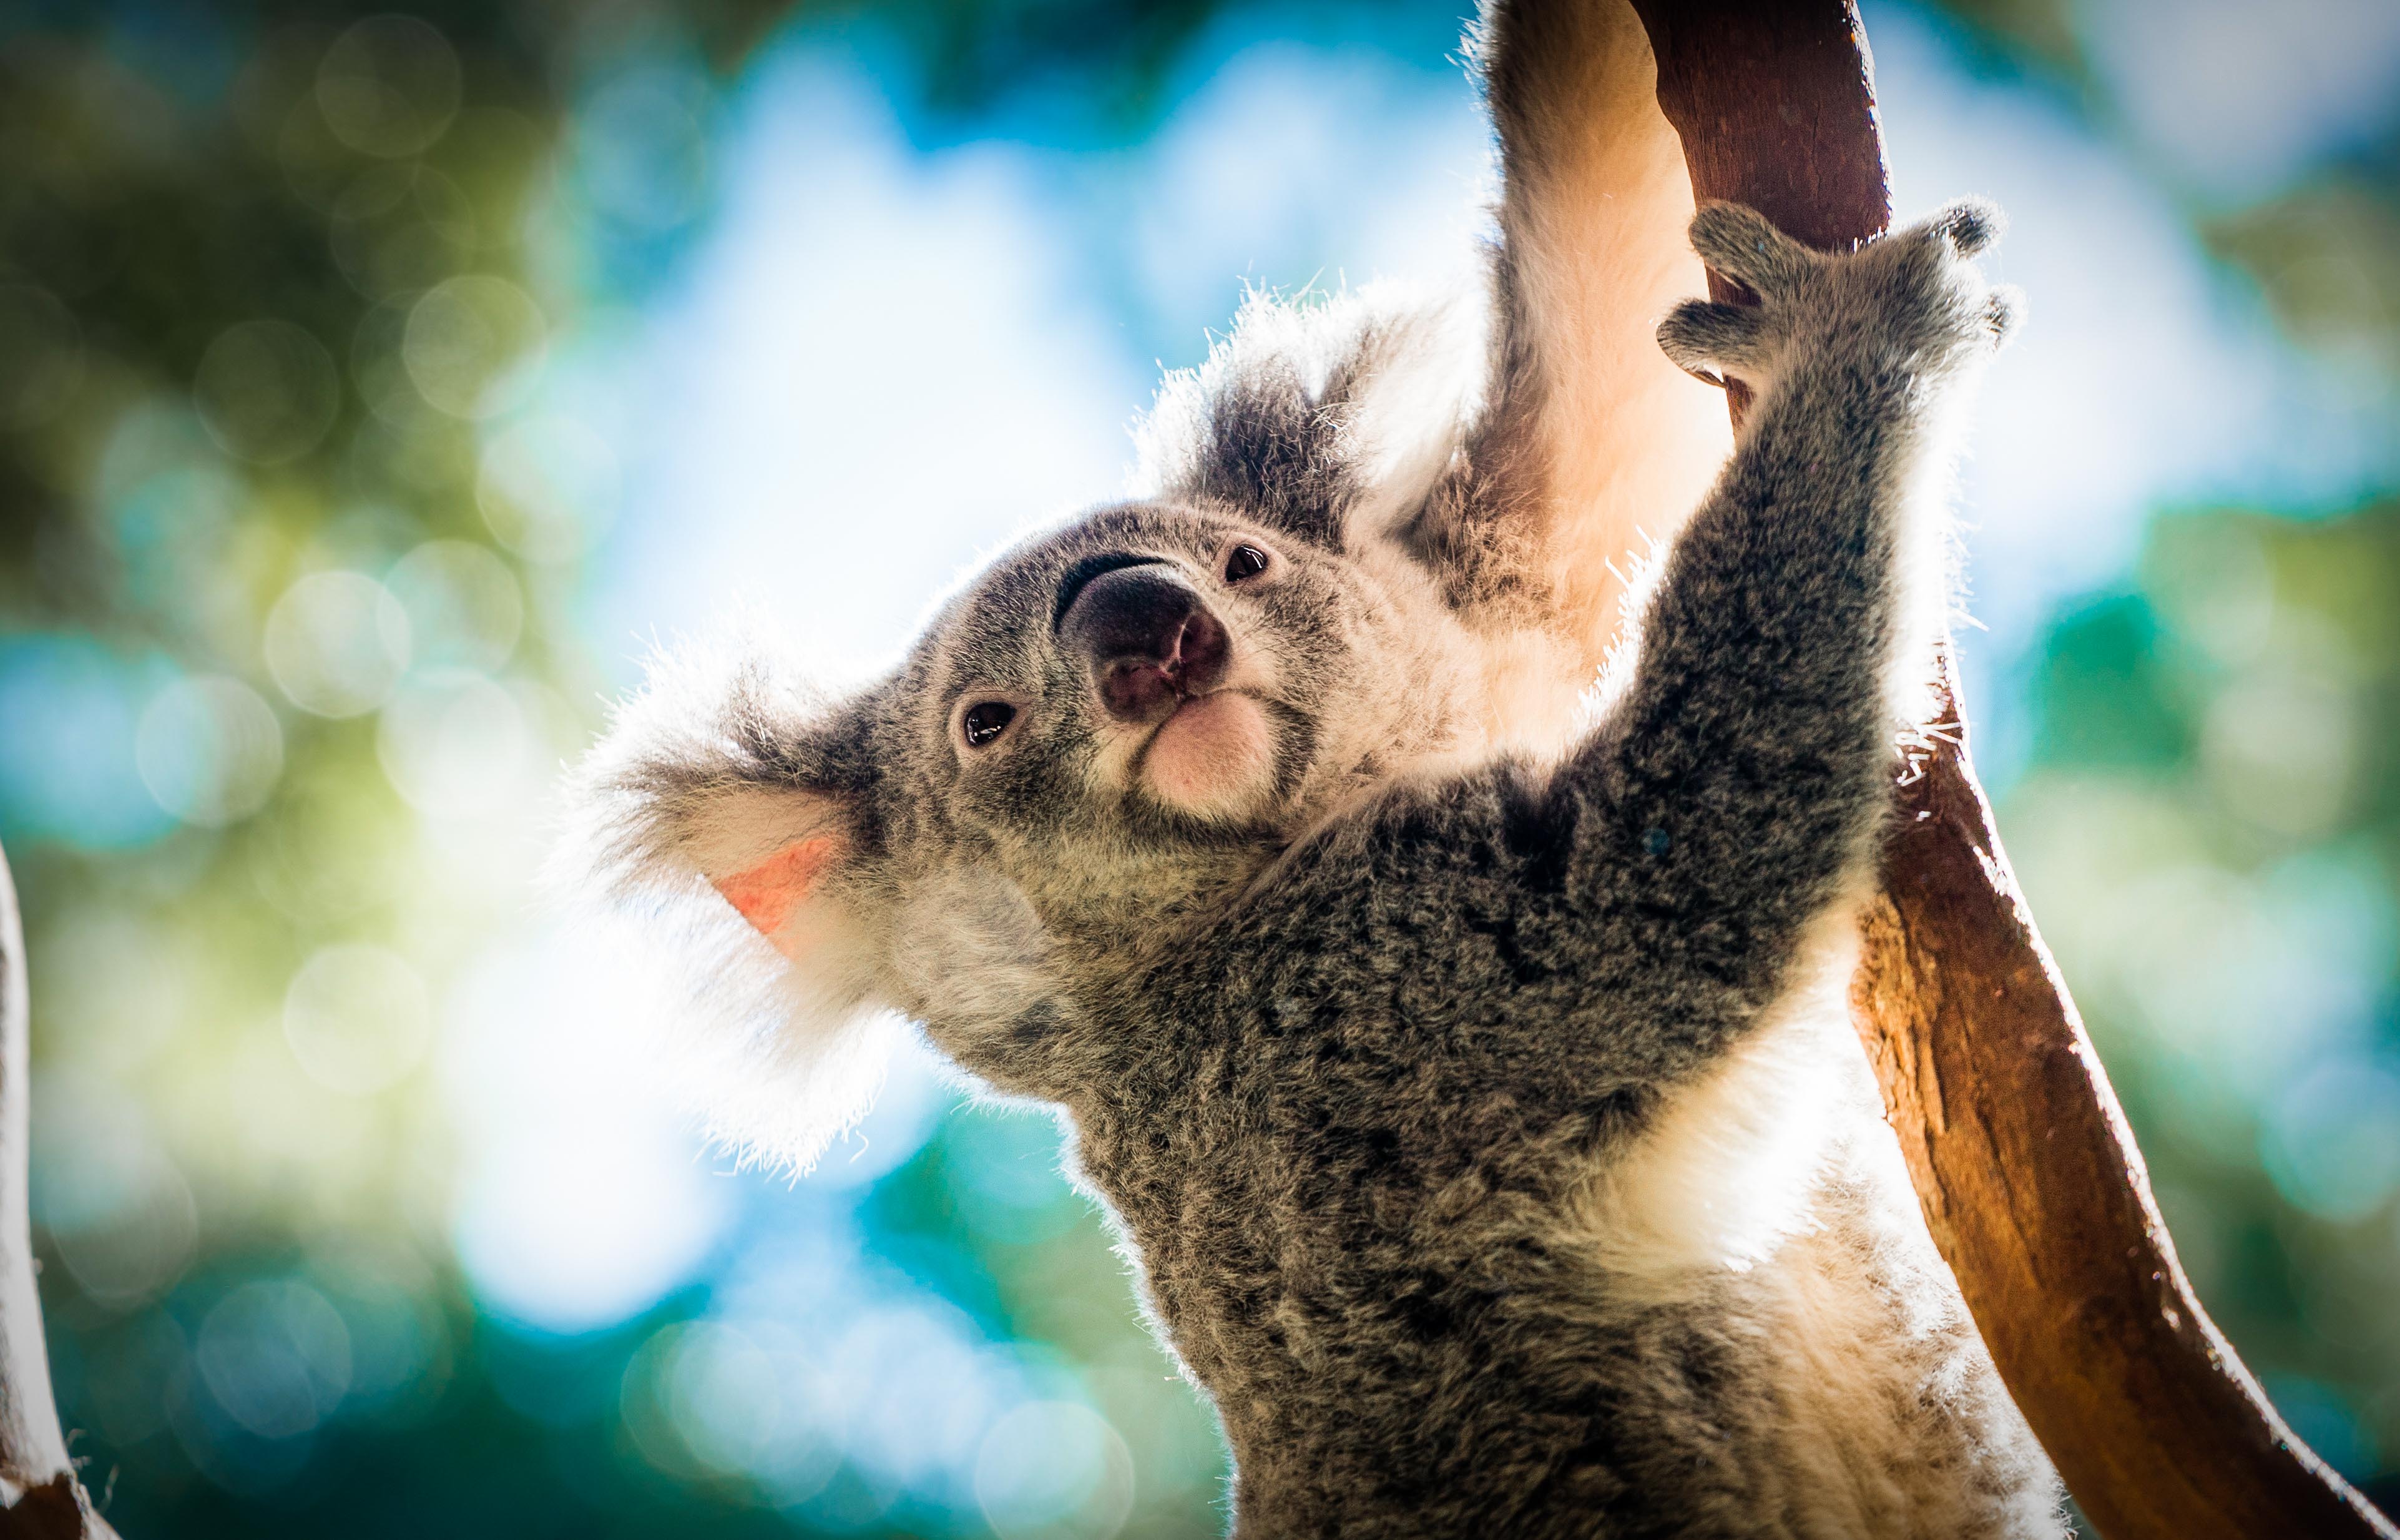 Australia Zoo Wildlife Warriors